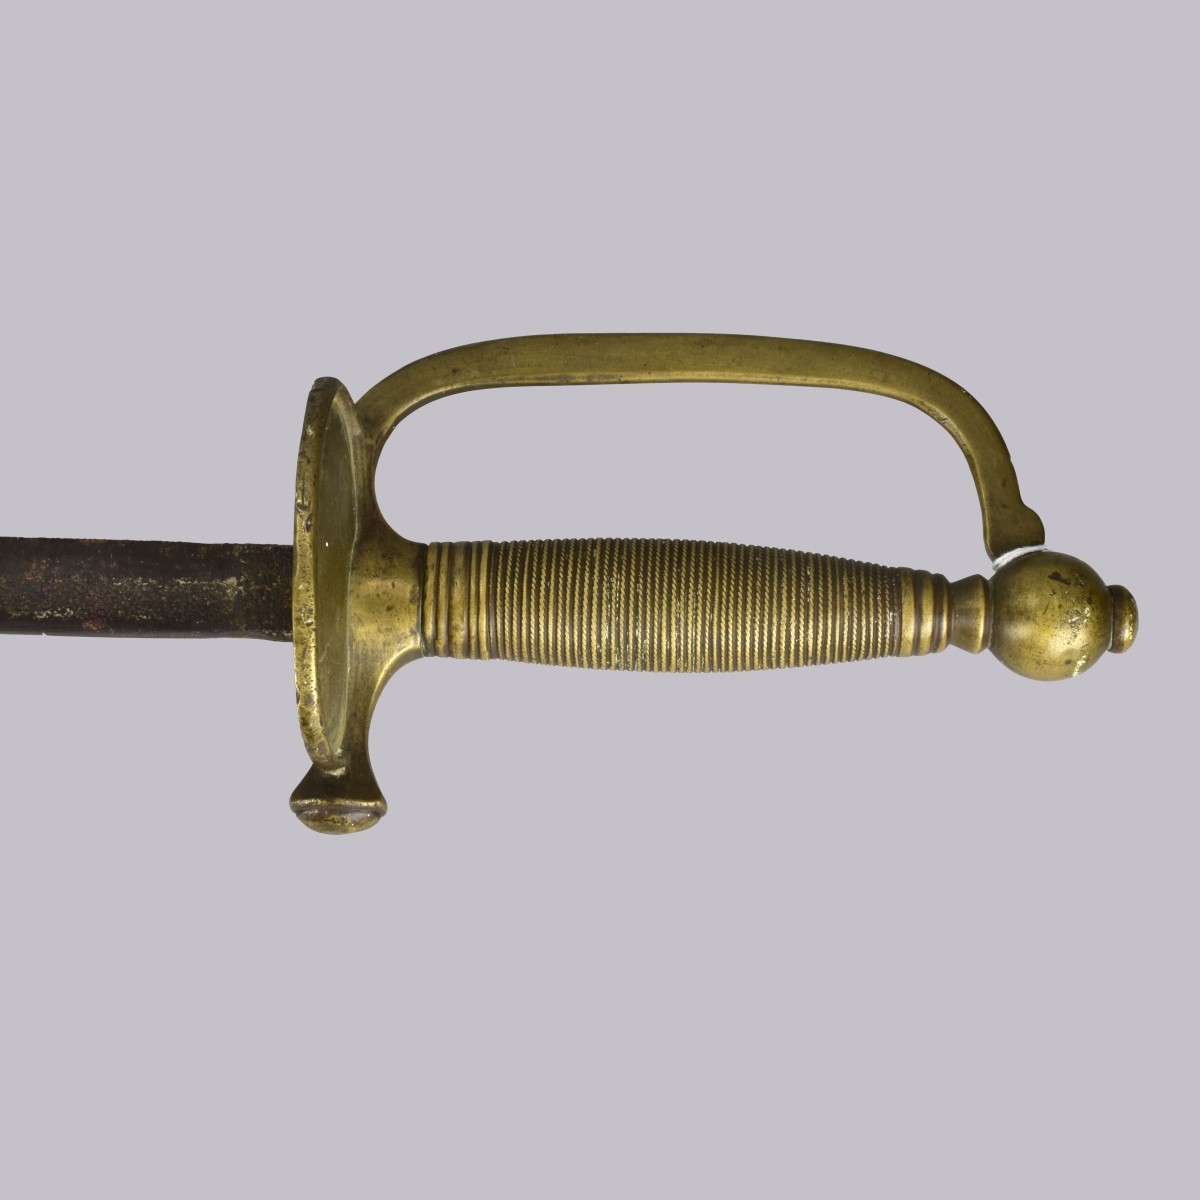 Circa 1860s U.S. Marine Sword